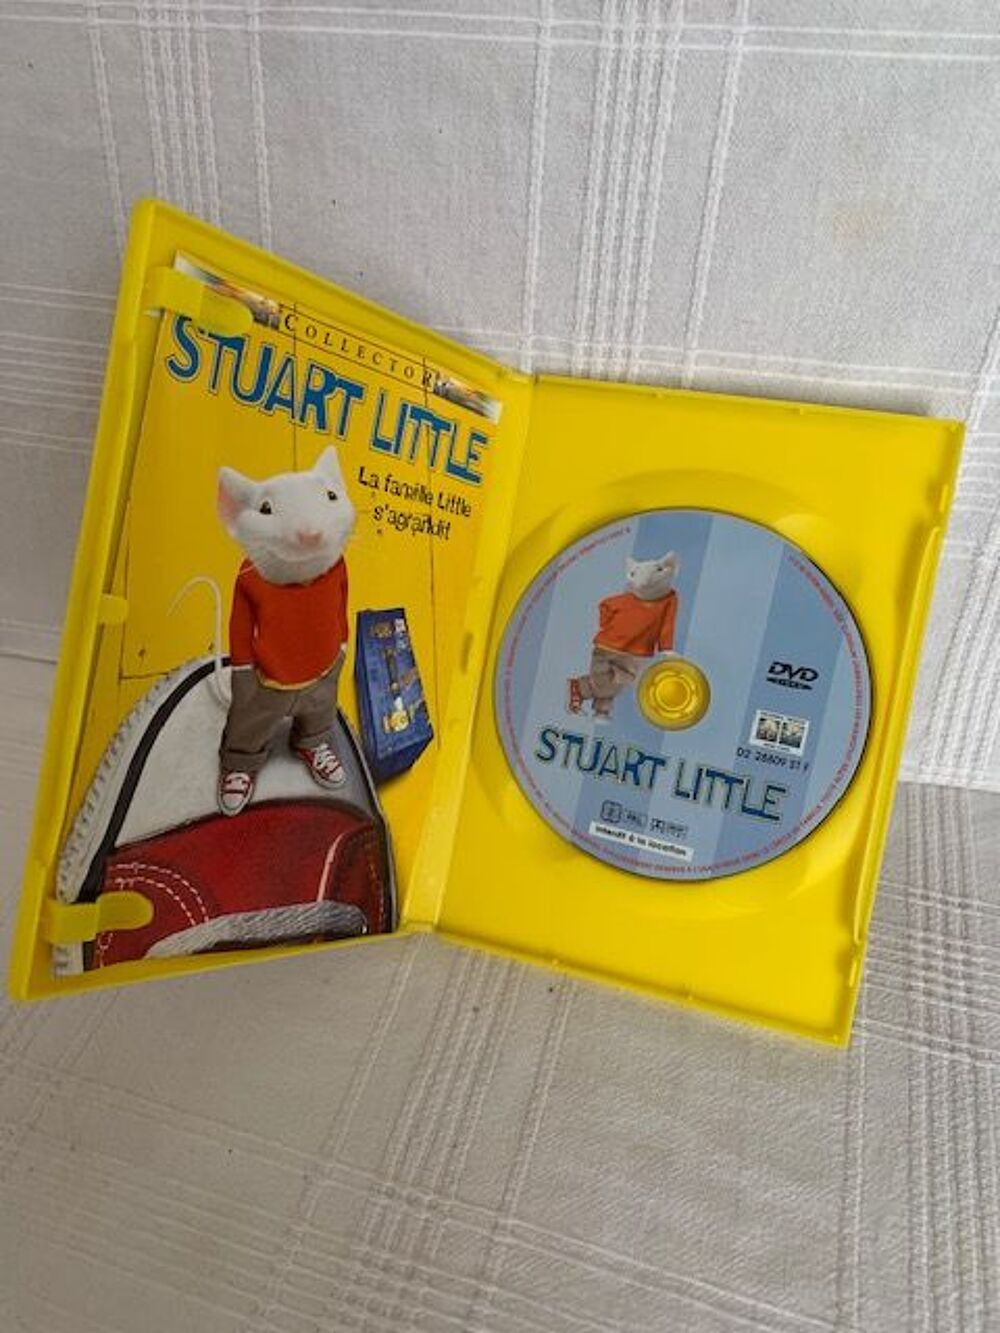 *F16 	
Stuart Little DVD et blu-ray